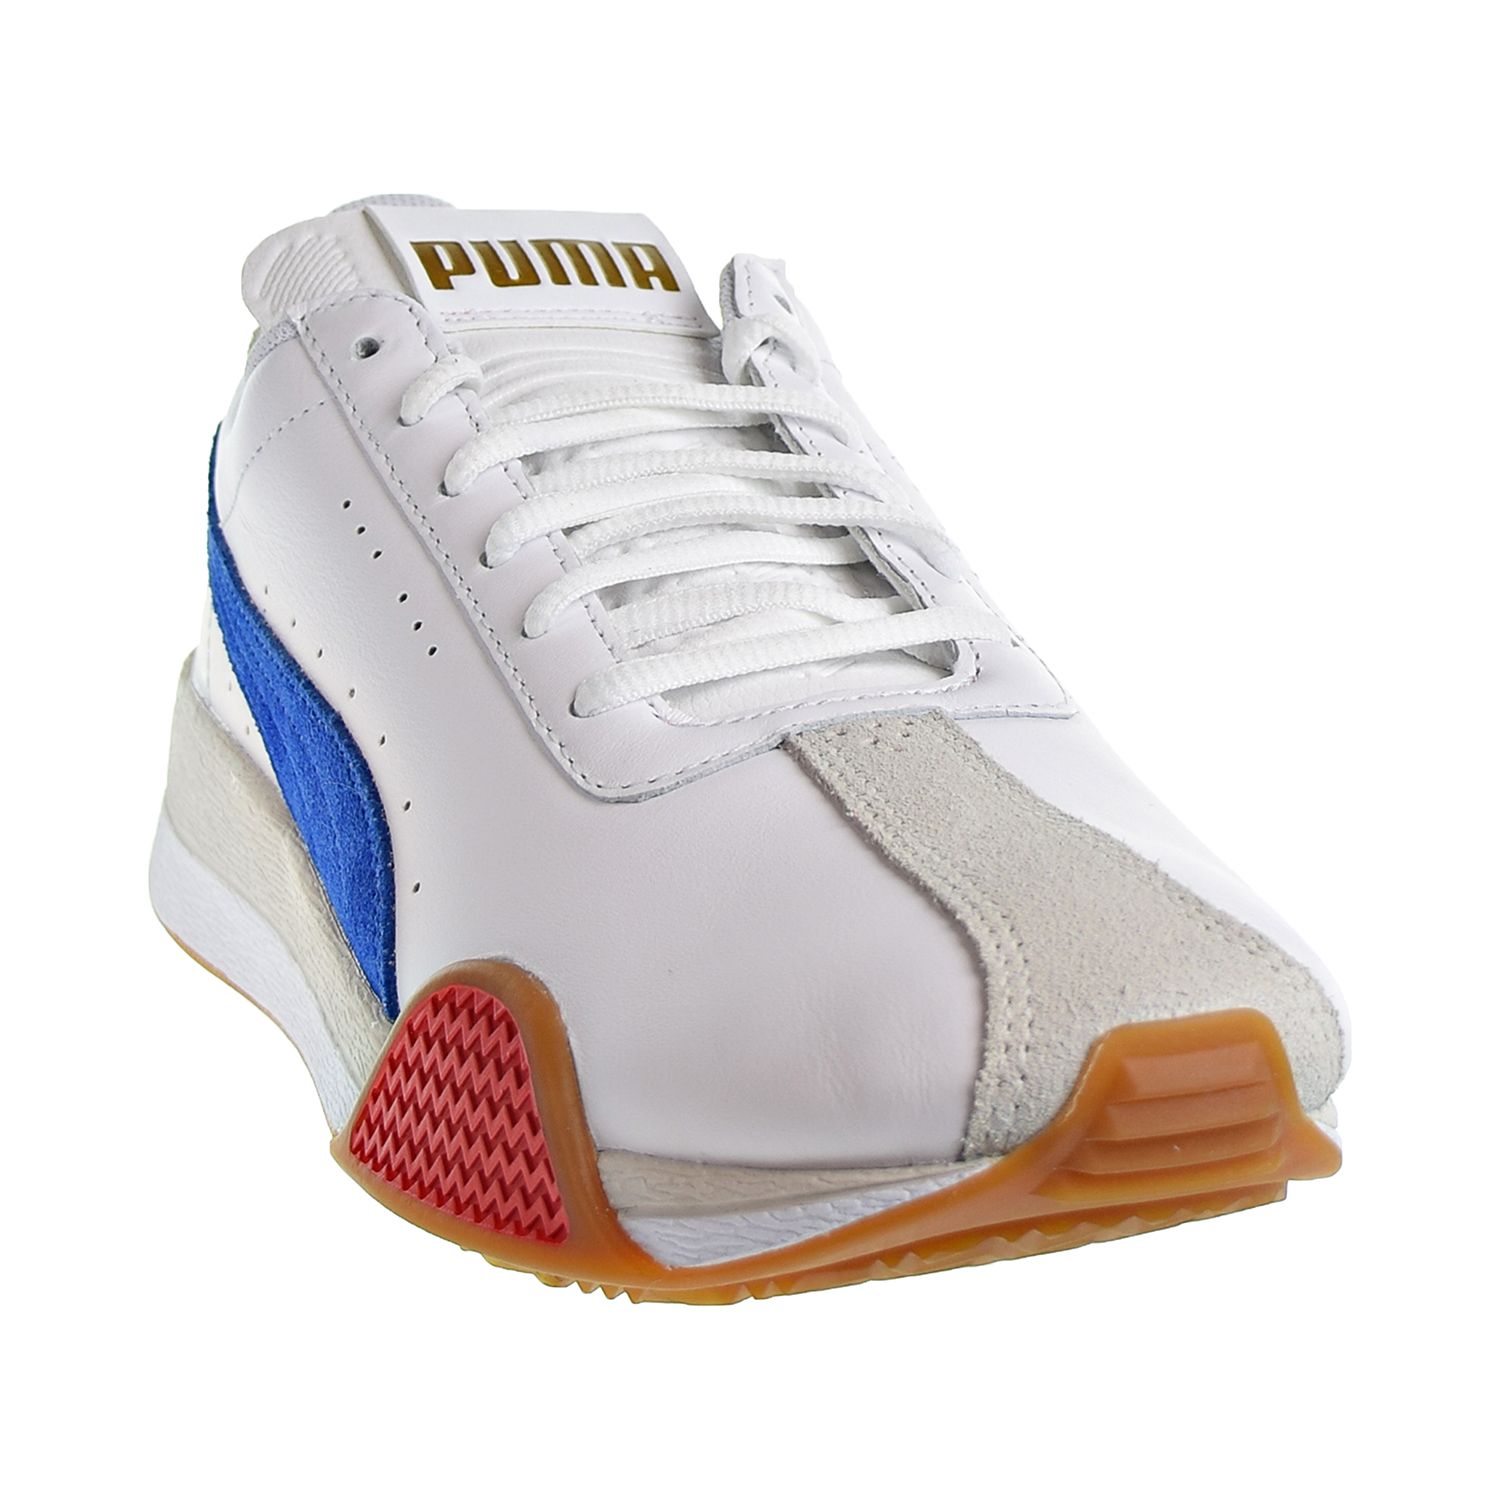 Puma Turin_0 Men's Shoes Puma White/Turkish Sea/High Risk Red 367794-01 - image 2 of 6